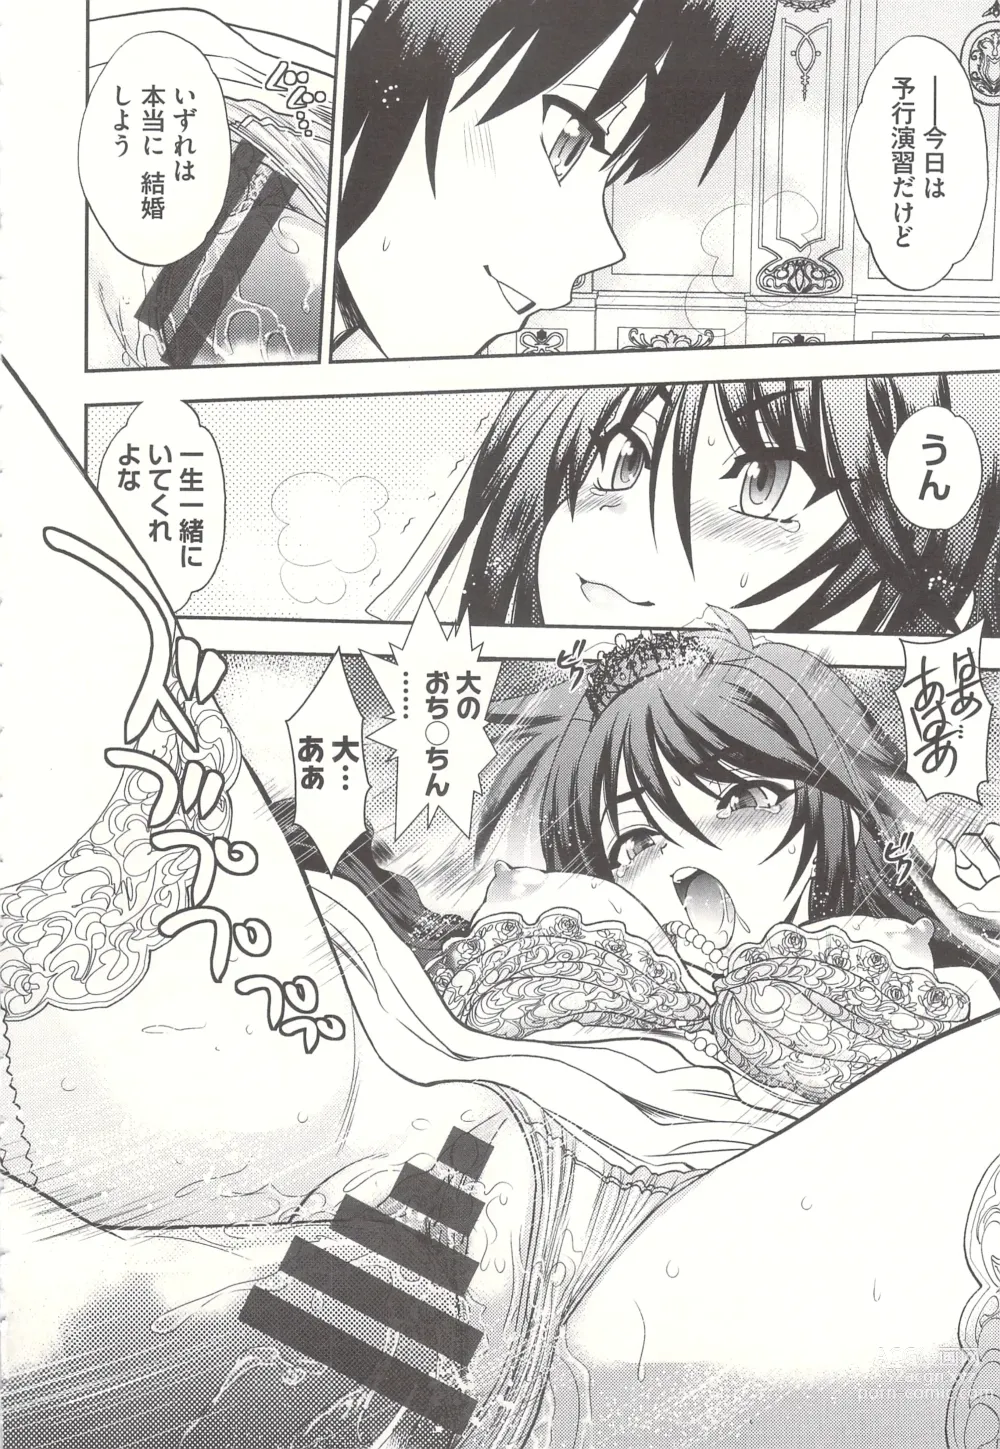 Page 202 of manga Tsujidou-san no Virgin Road Adult Edition